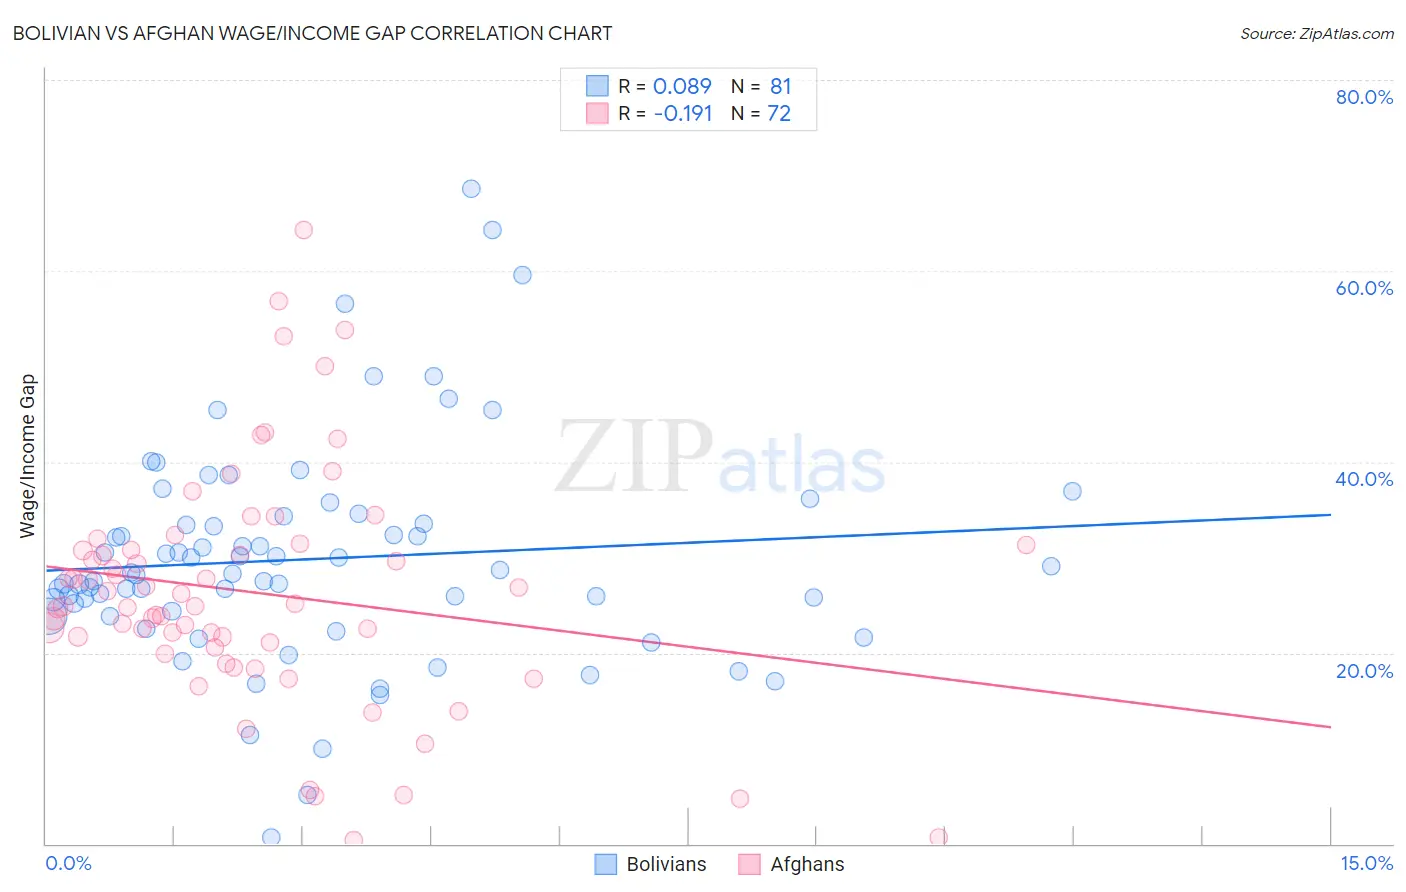 Bolivian vs Afghan Wage/Income Gap